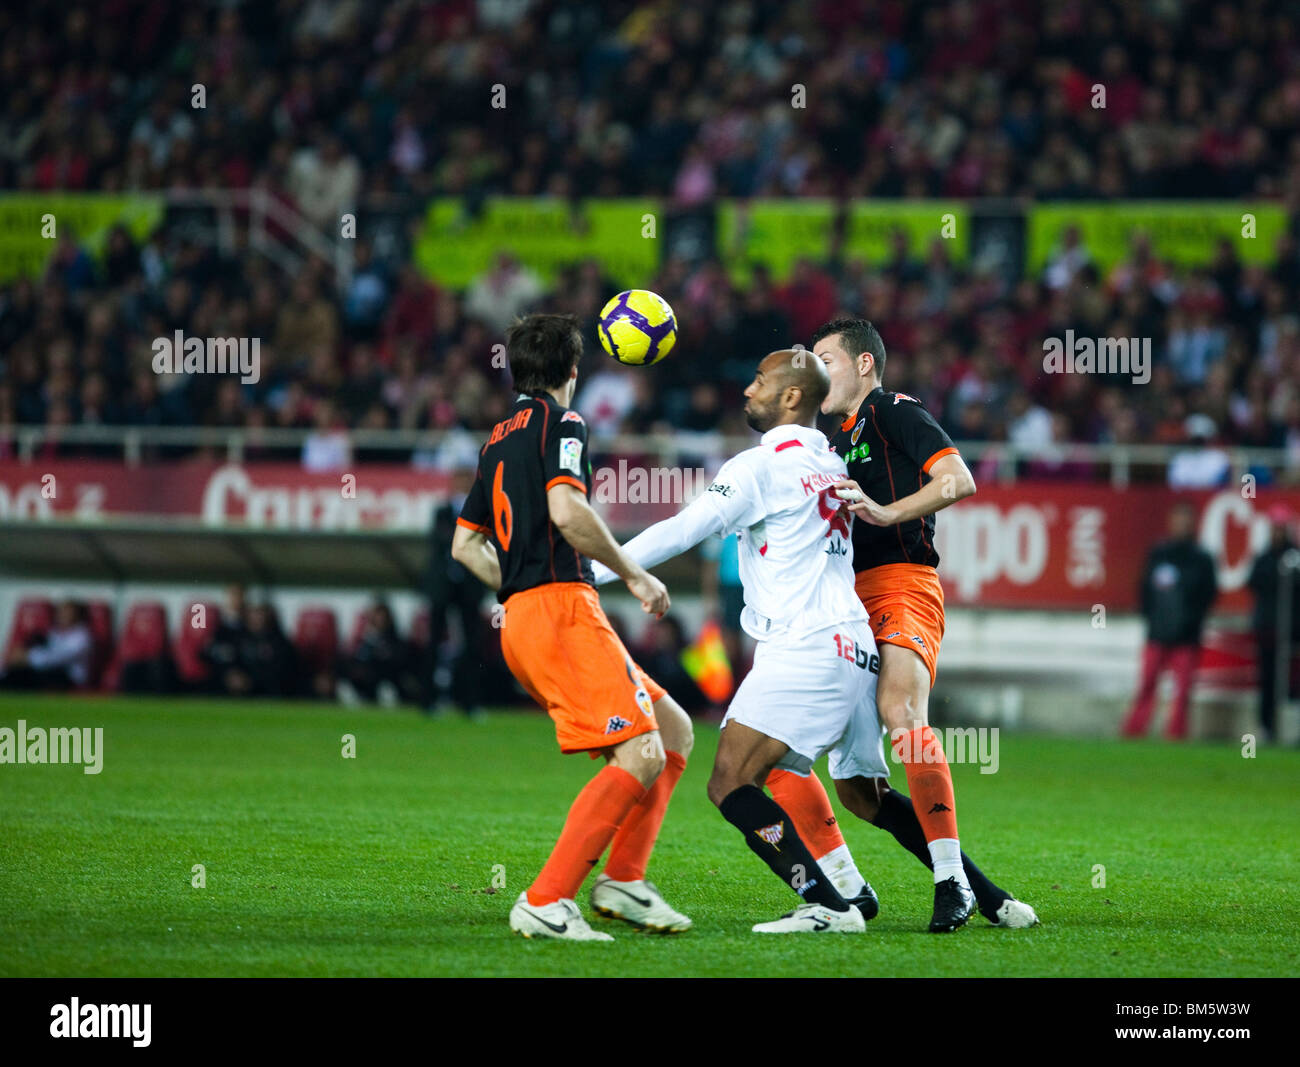 Kanoute fighting for the ball between Albelda (left) and David Navarro. Stock Photo